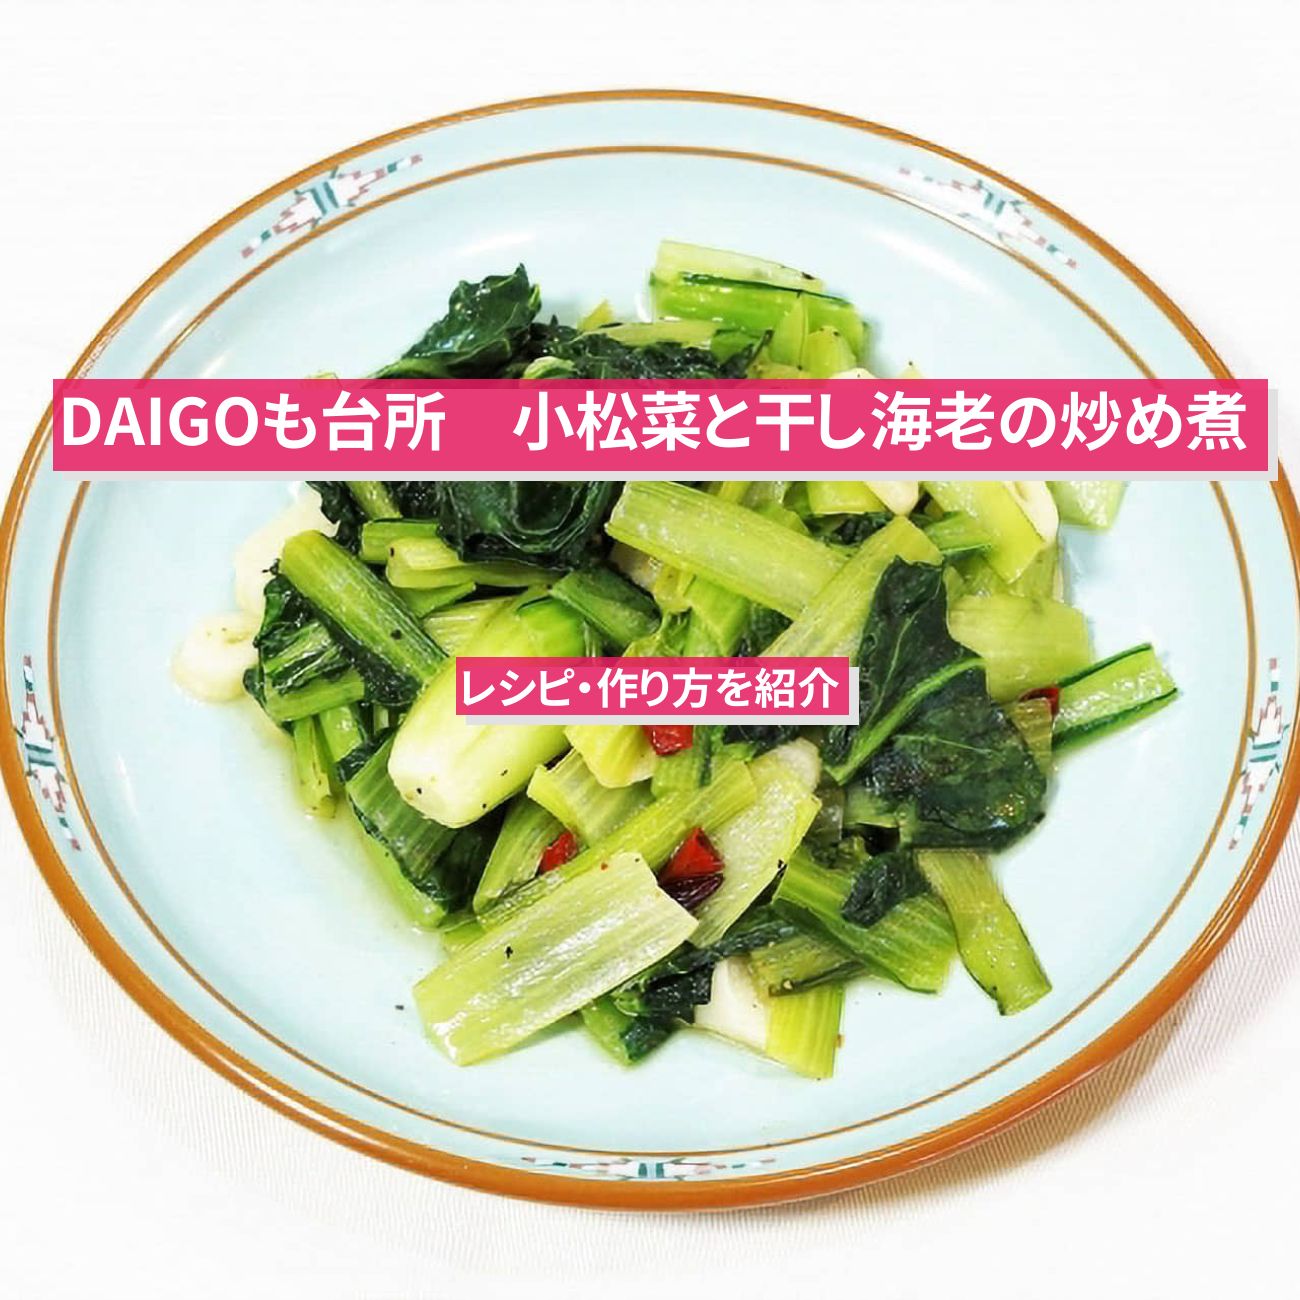 【DAIGOも台所】『小松菜と干し海老の炒め煮』のレシピ・作り方を紹介〔ダイゴも台所〕